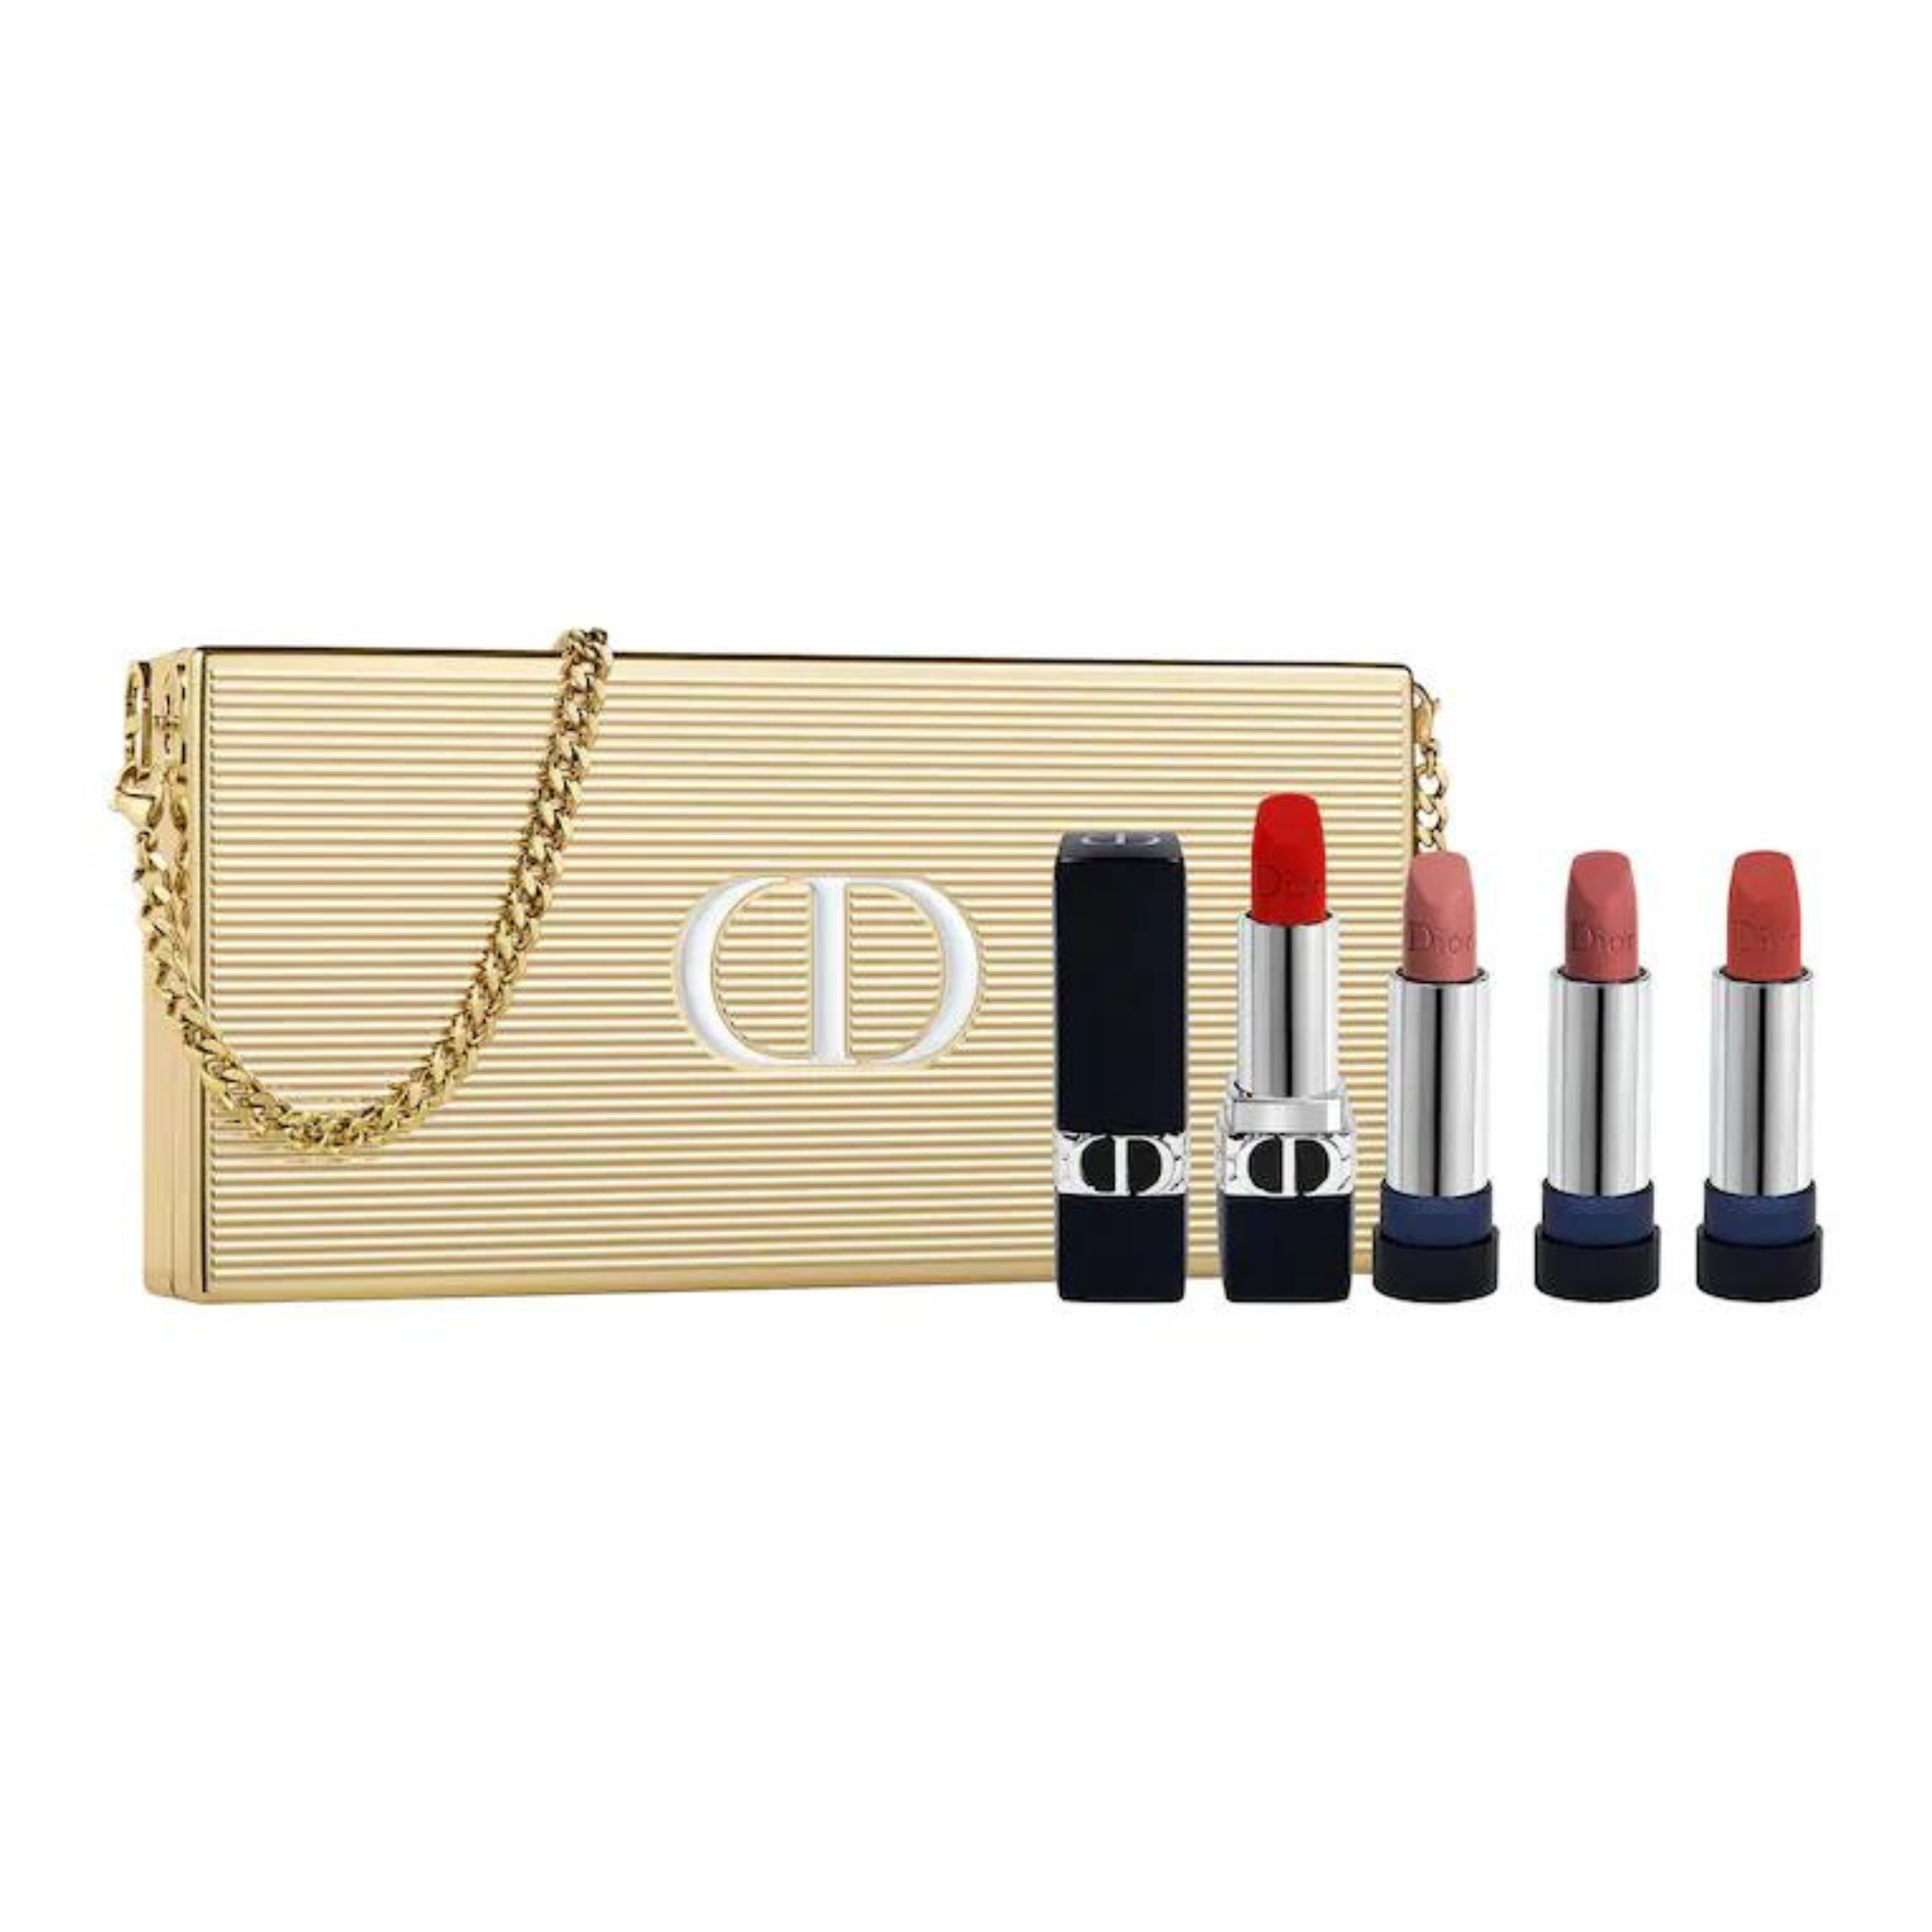 Dior Lipstick Collection Case + Gold Clutch!!